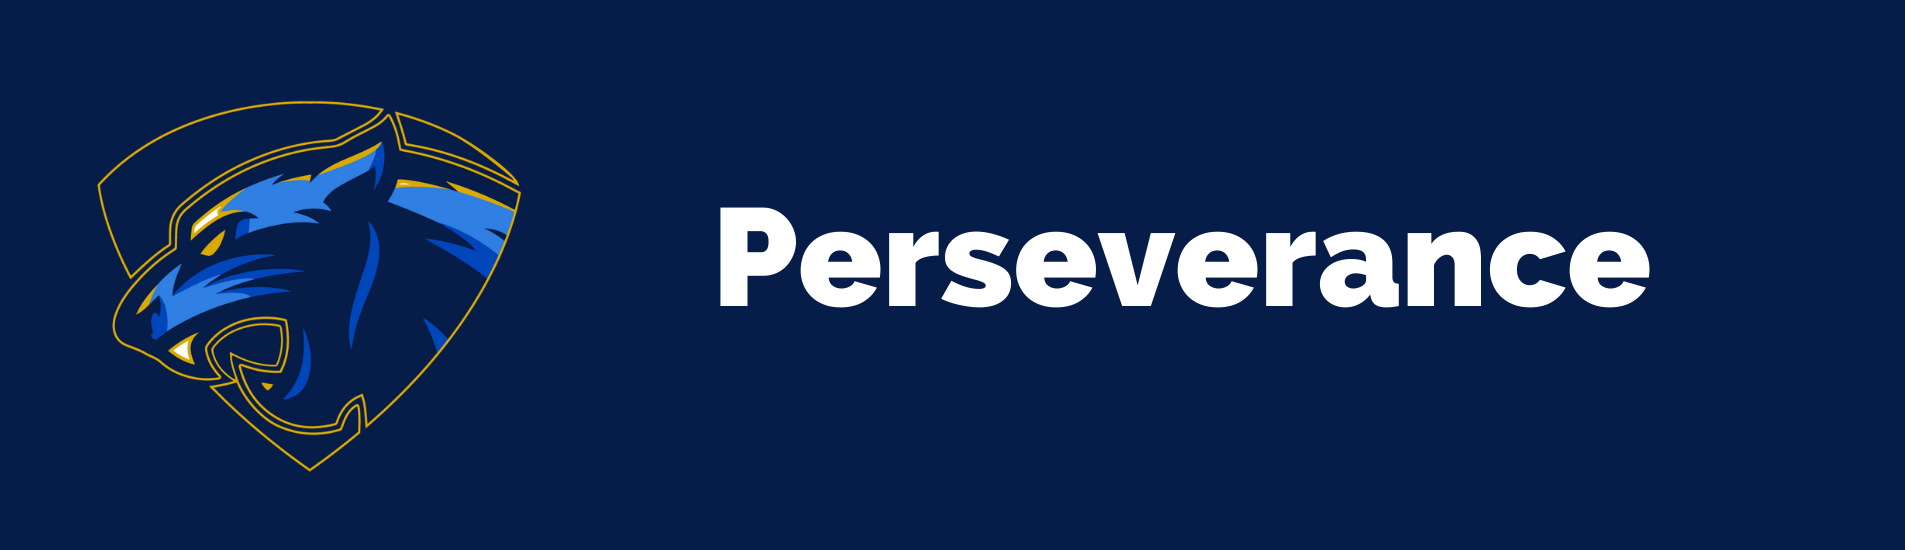 Perseverance value banner